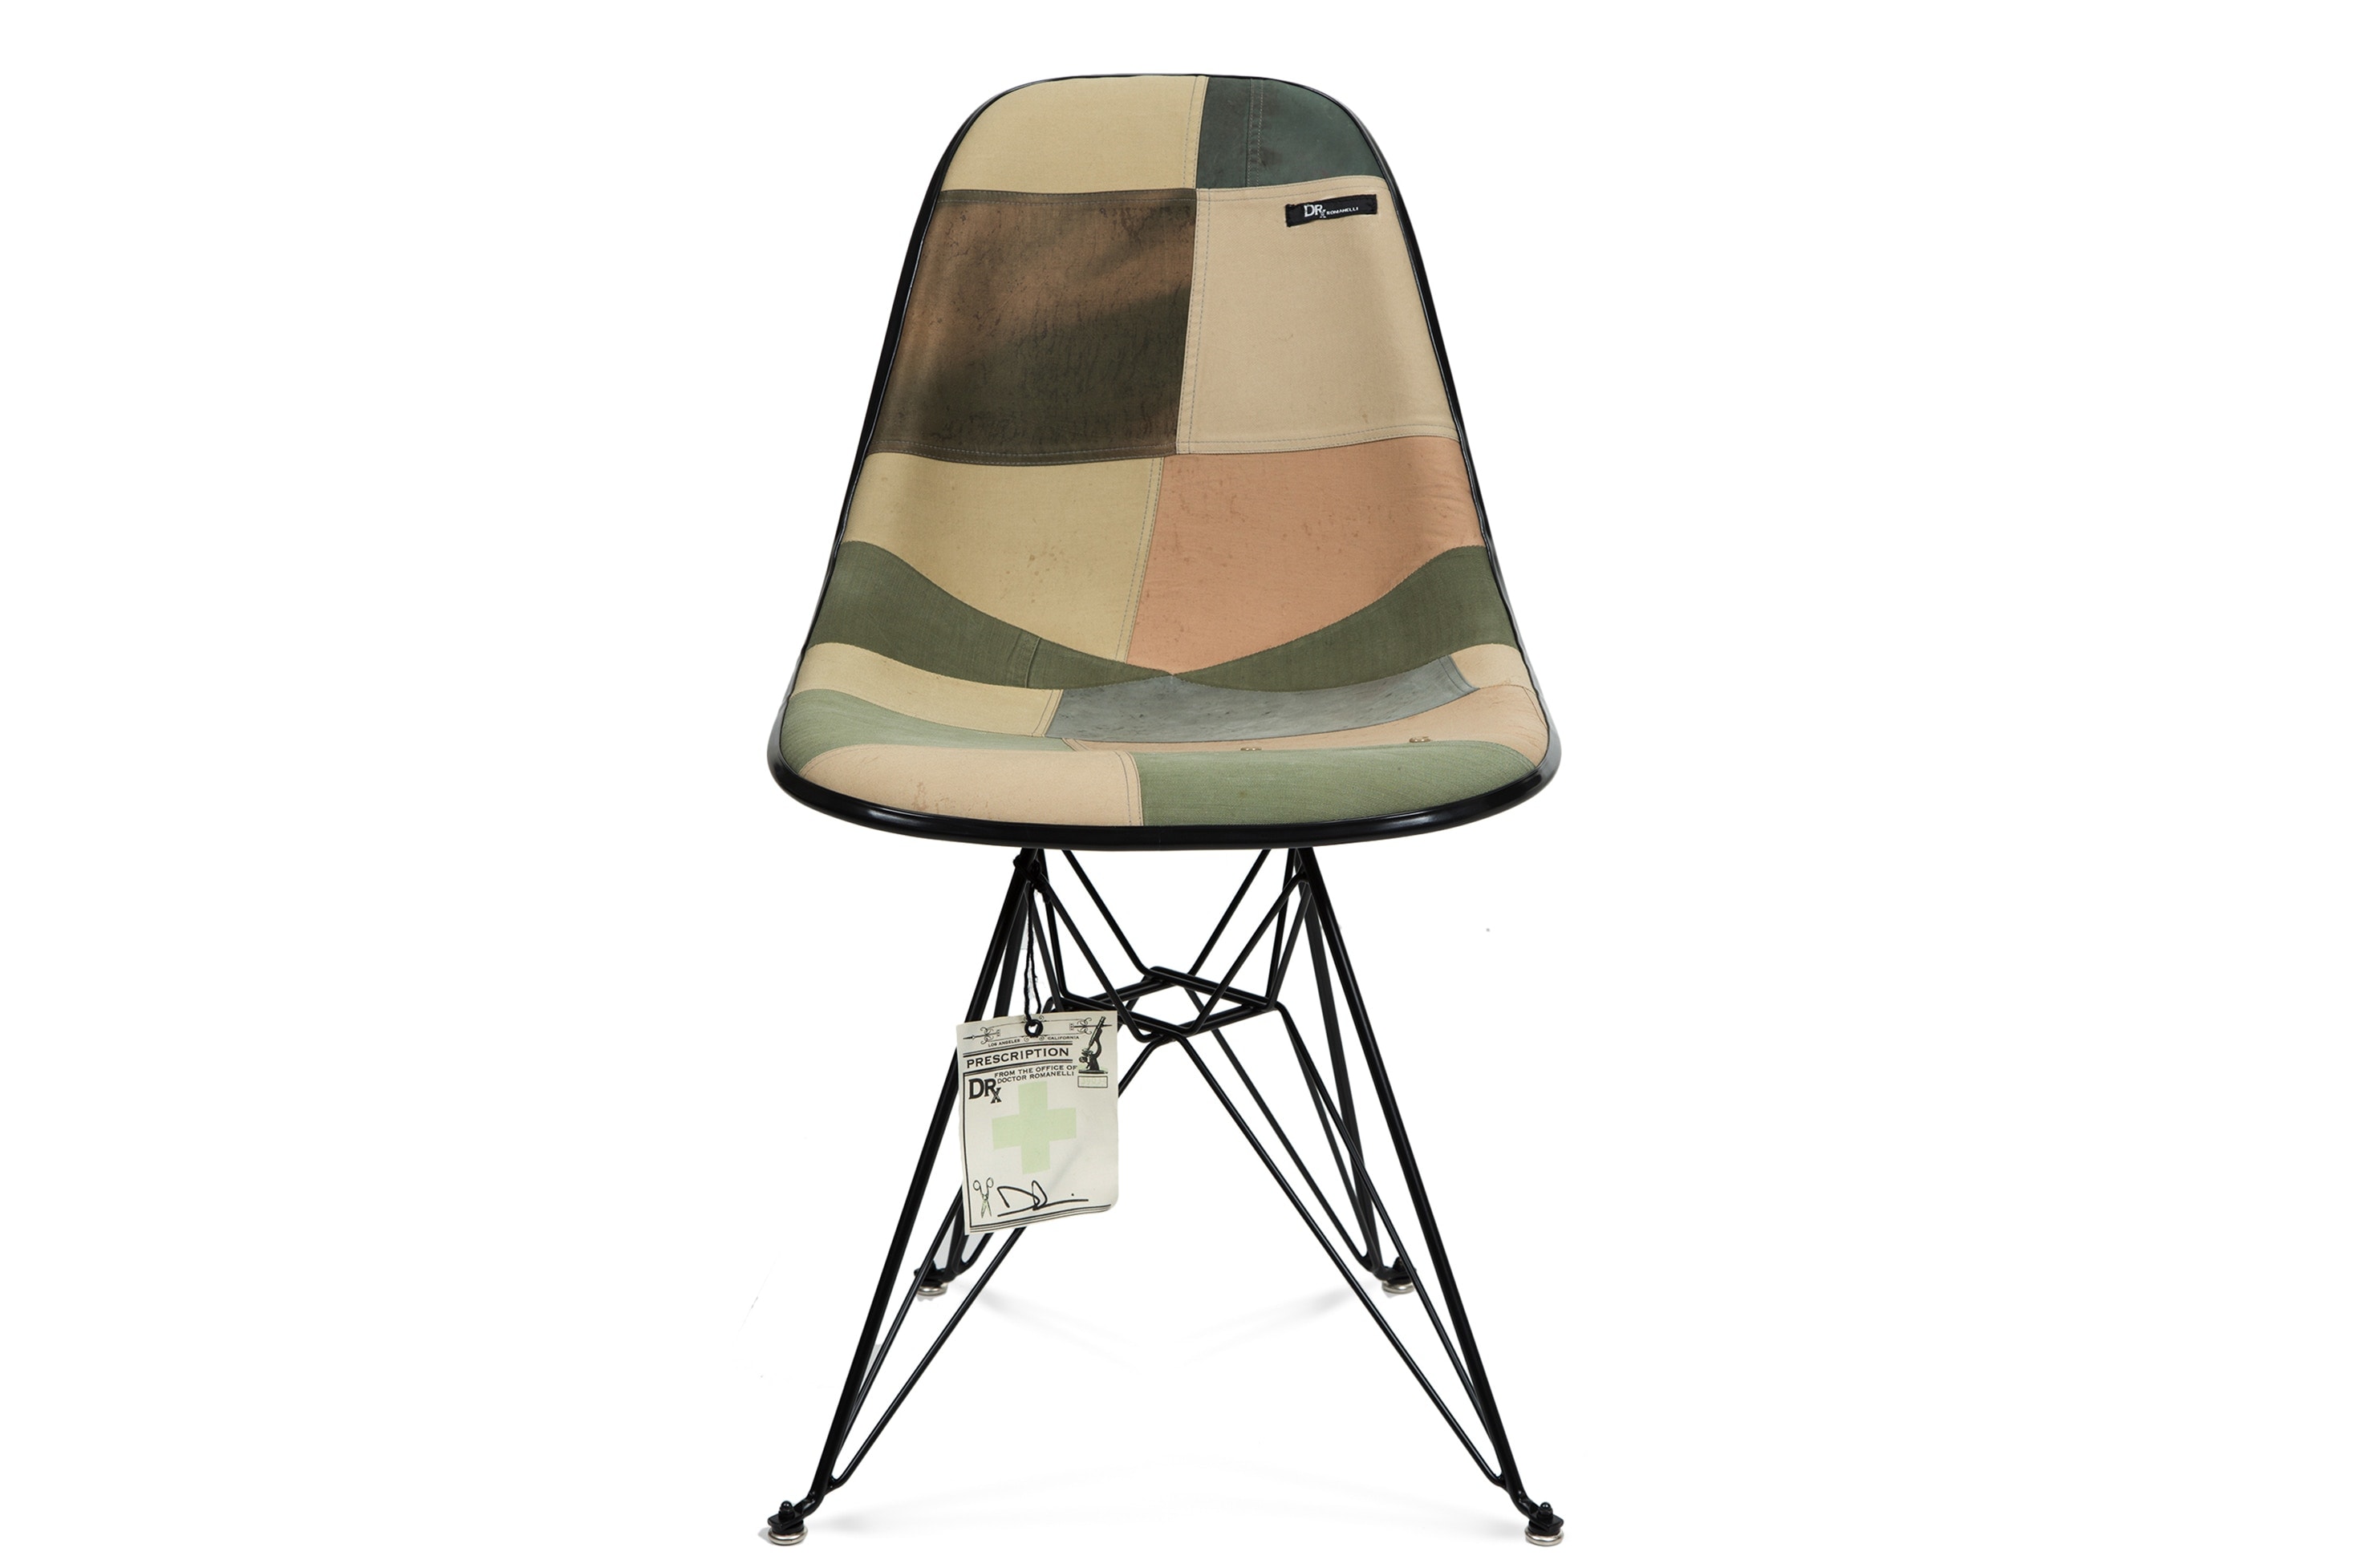 Modernica x DRx Romanelli 聯名貝克椅系列完整公開